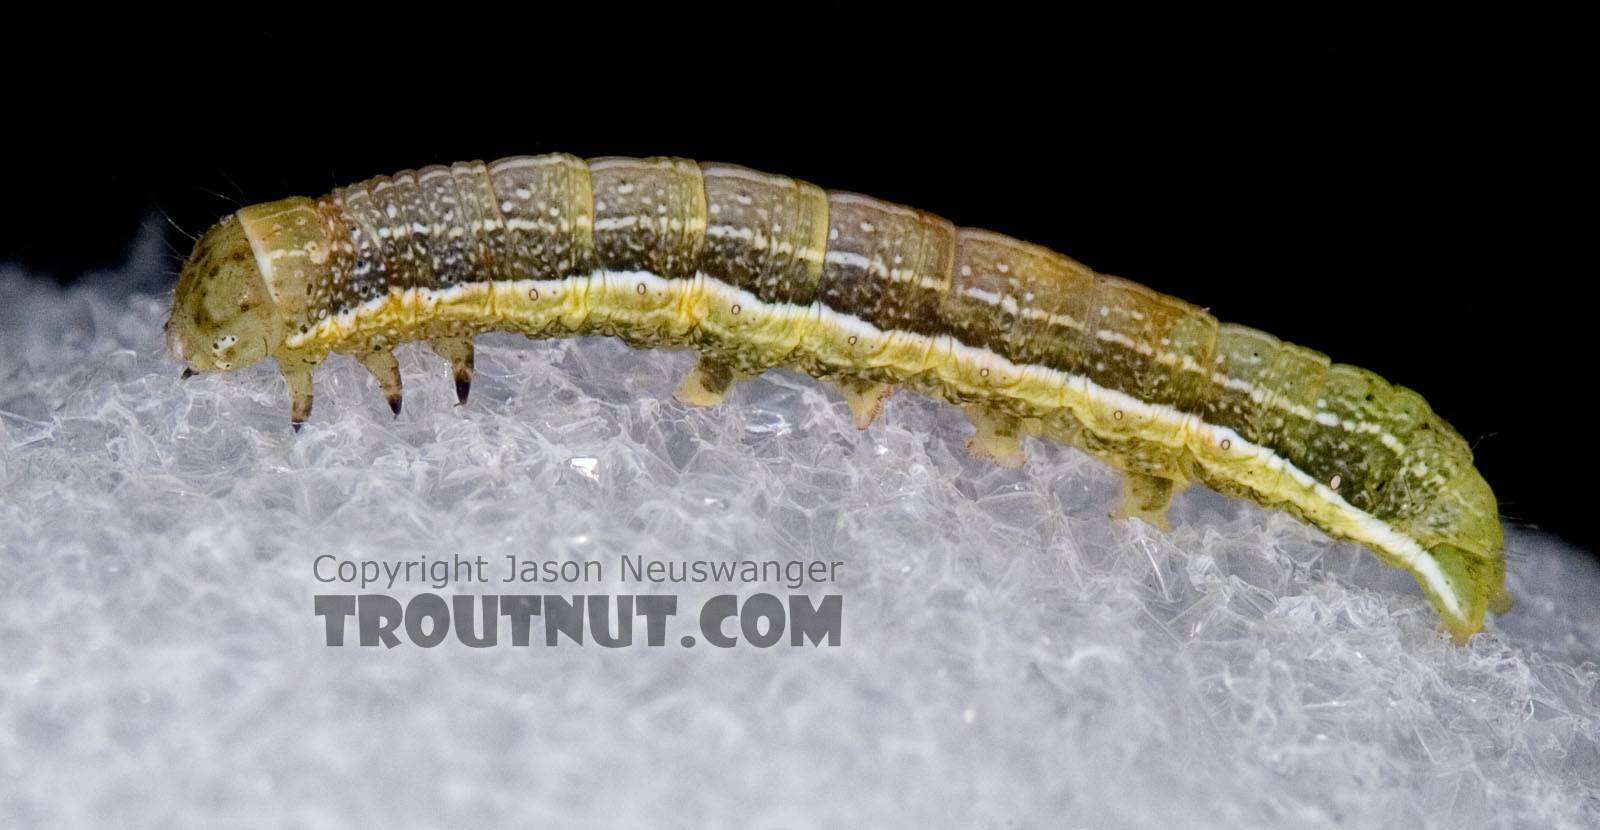 Geometridae (Inchworms) Moth Larva from Brodhead Creek in Pennsylvania